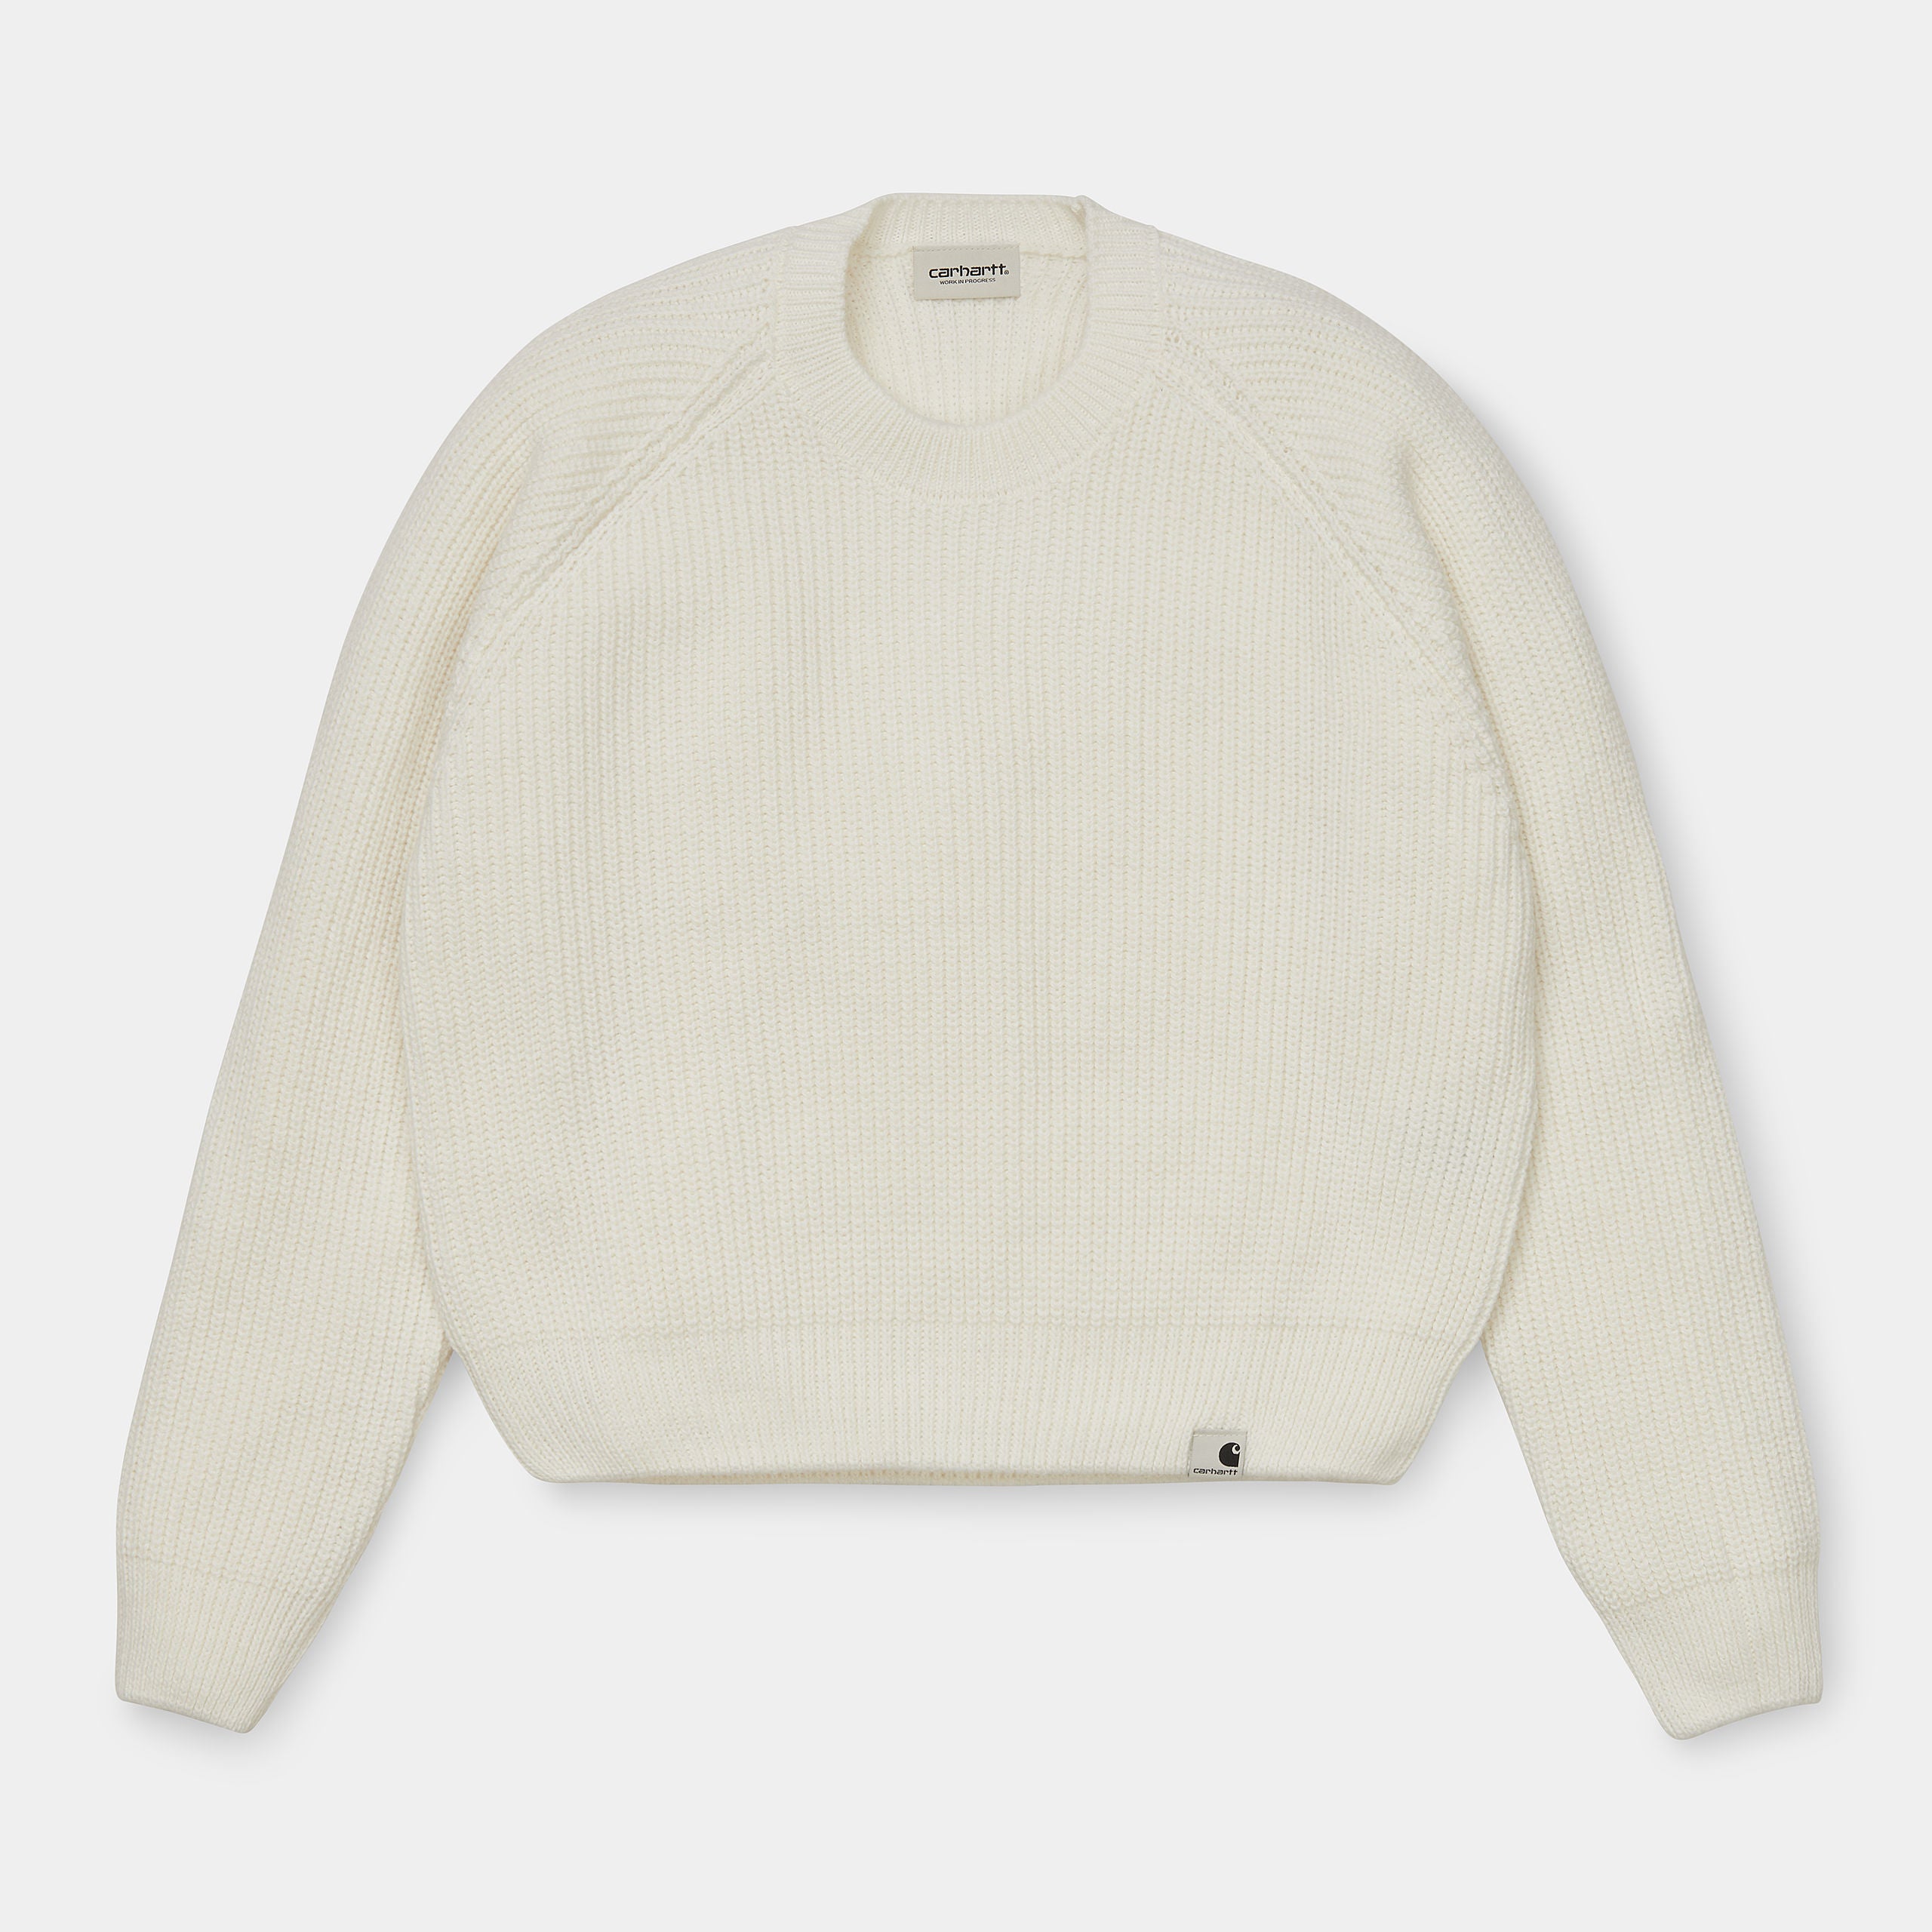 Carhartt  EMMA sweater / women